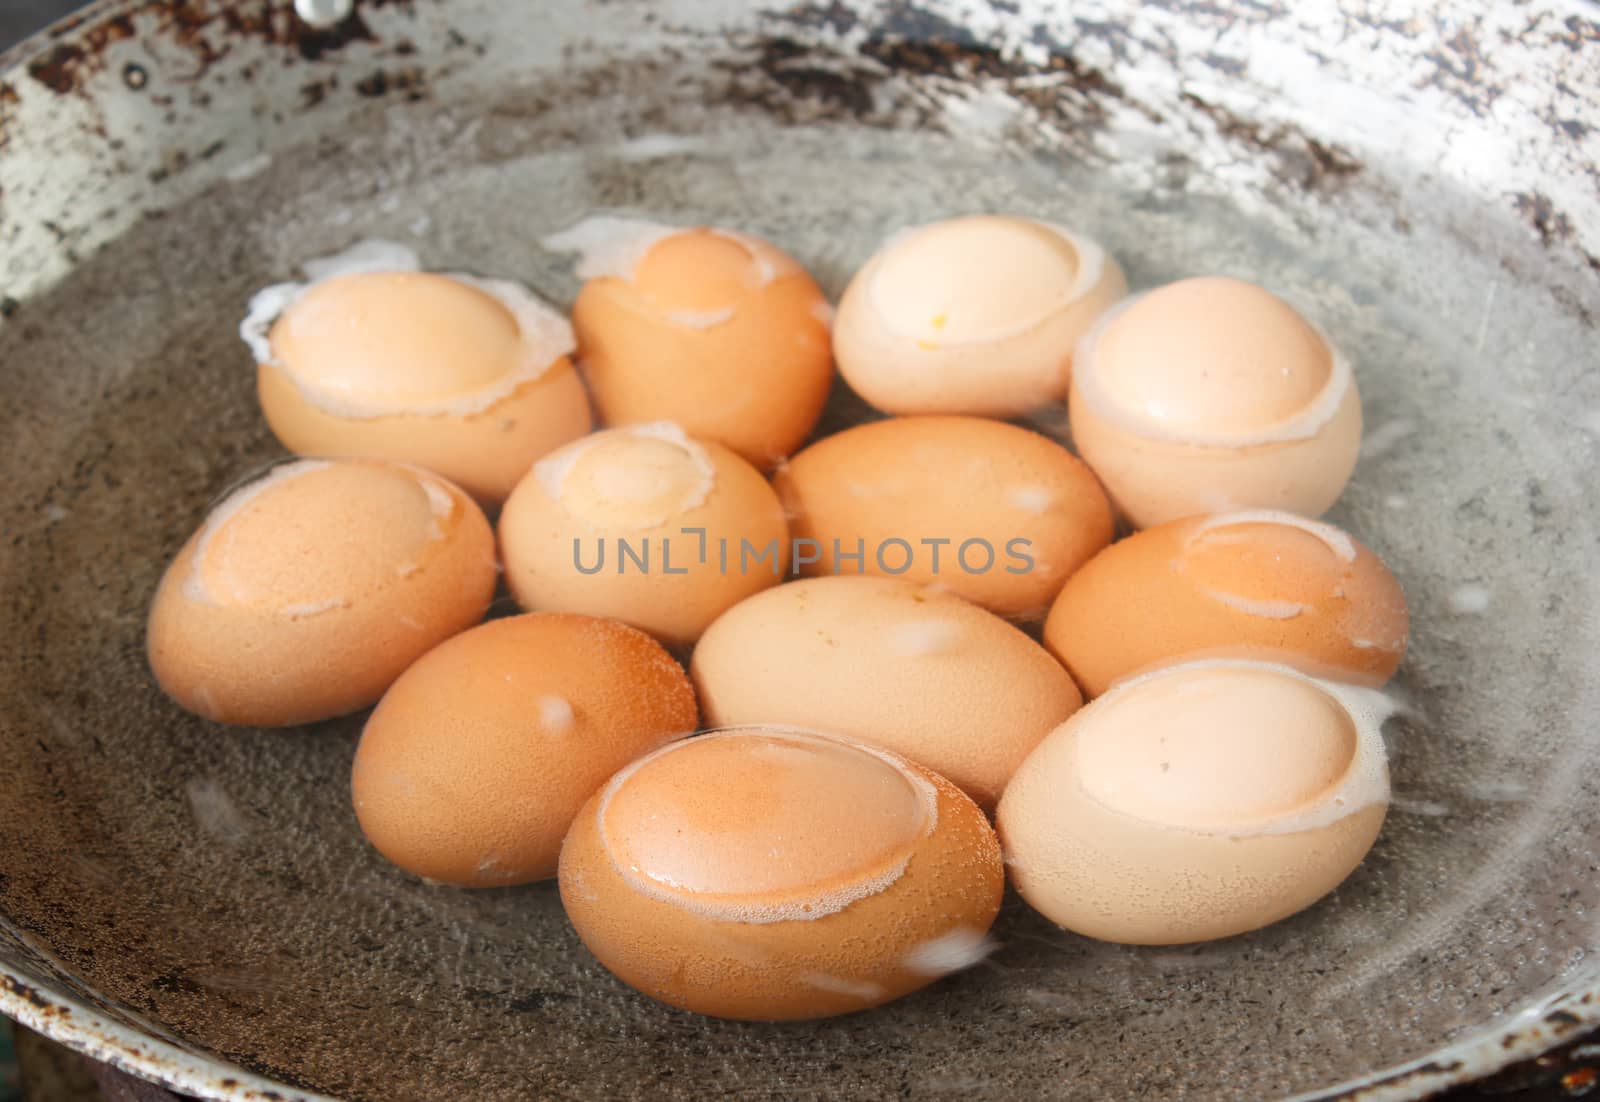 Boiled eggs by vitawin